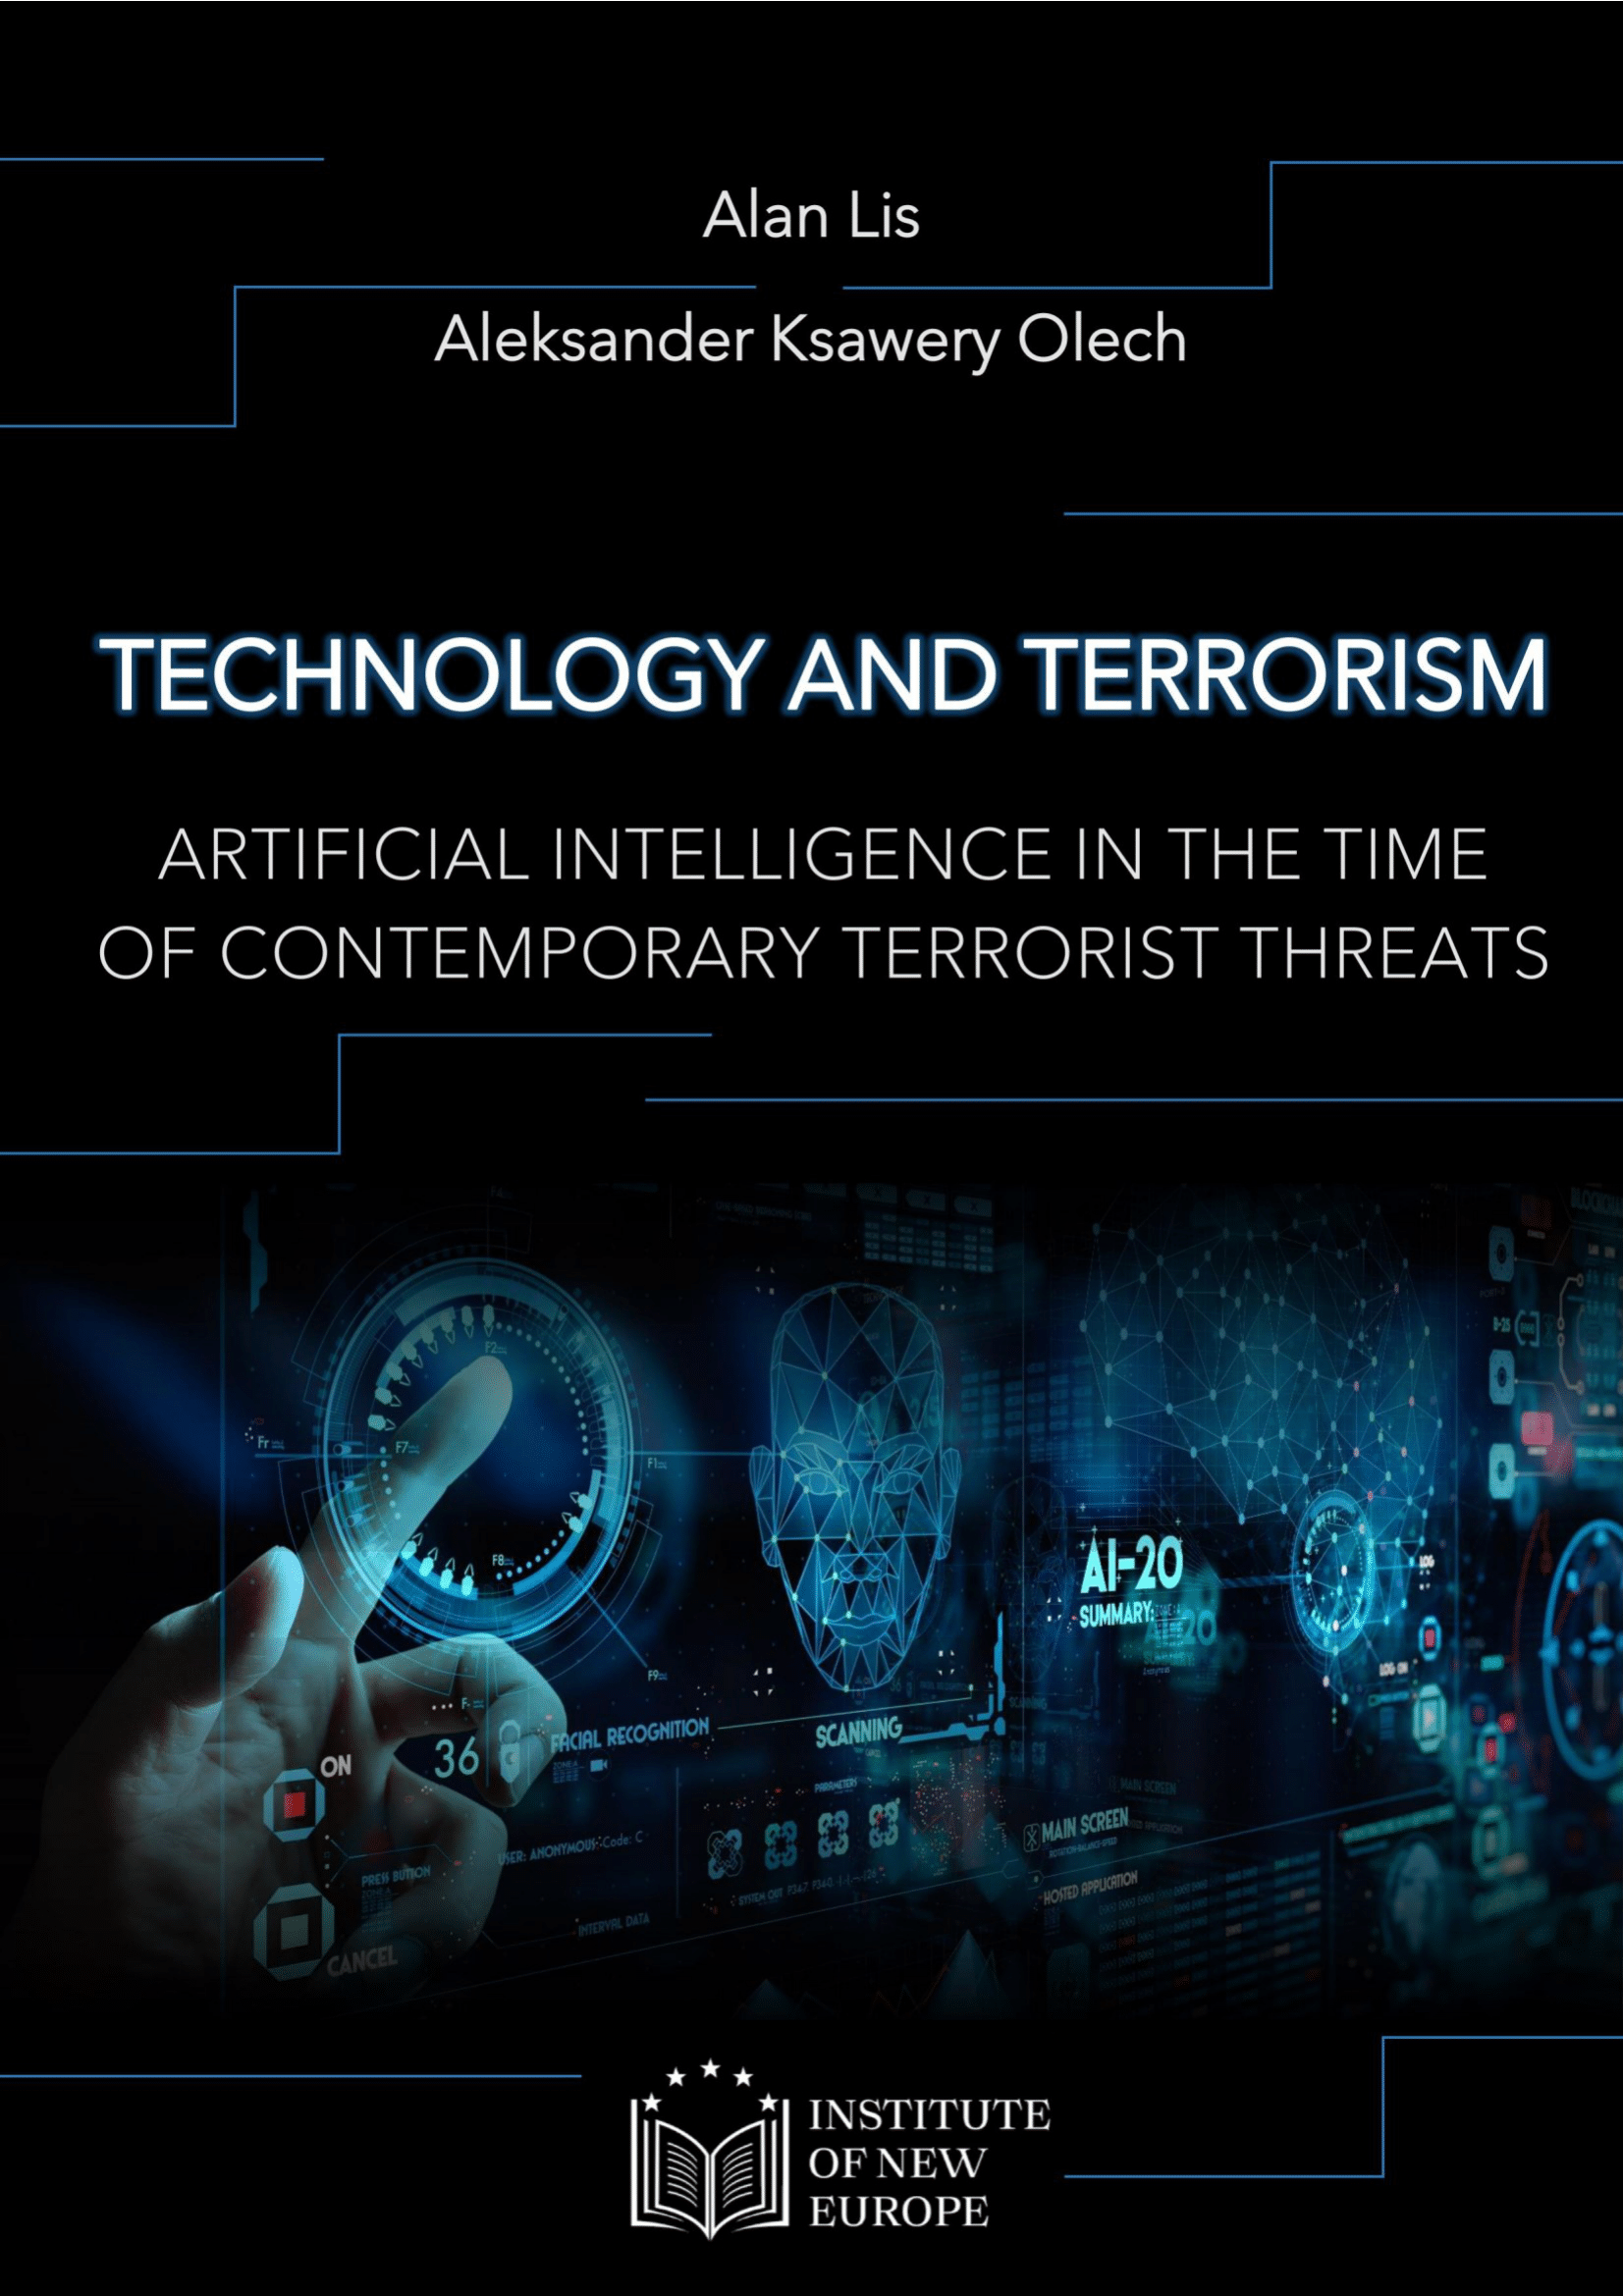 Artificial Intelligence in counterterrorism